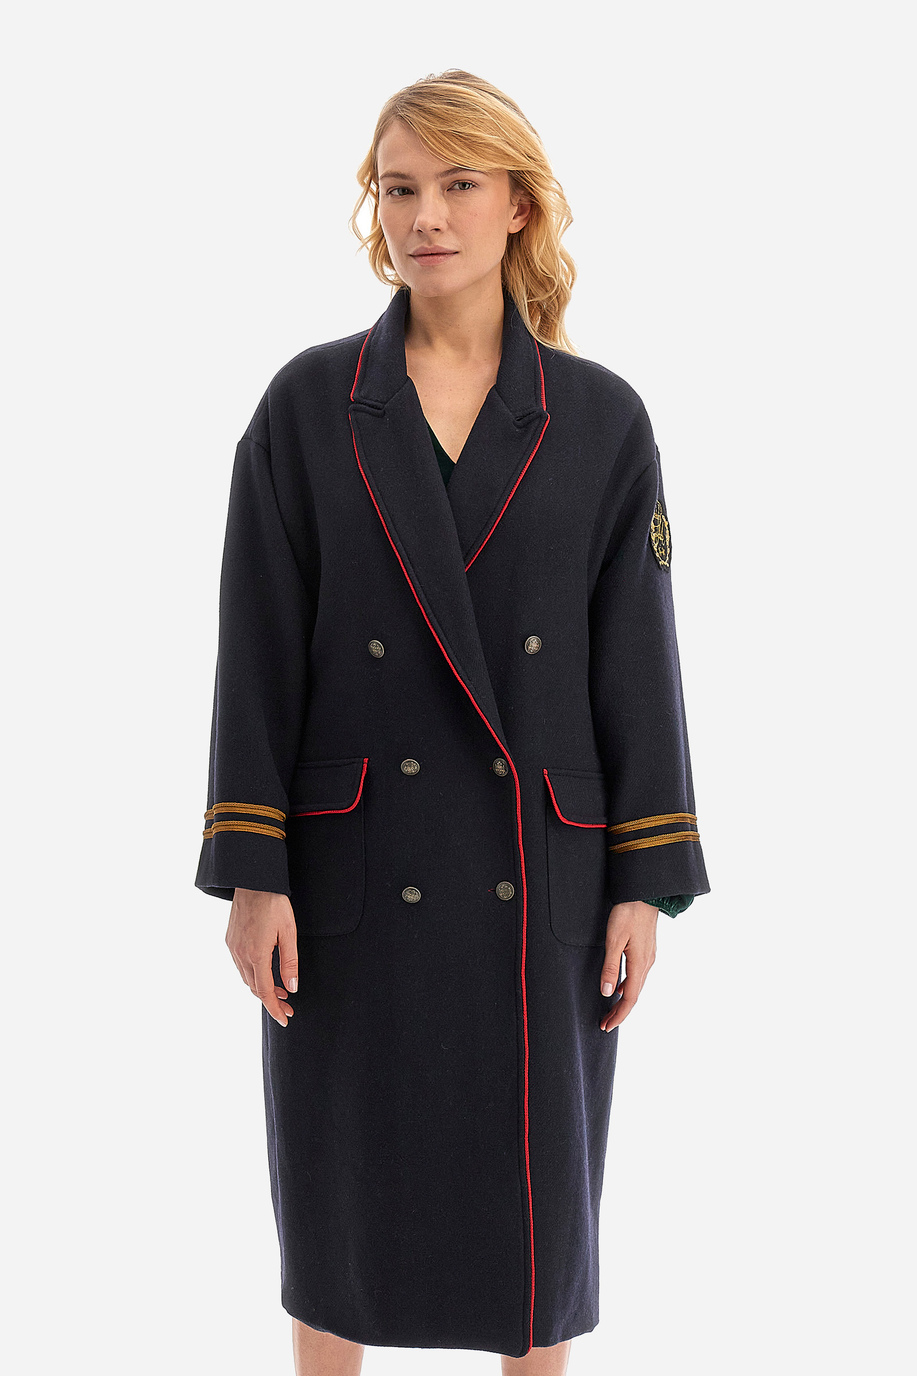 Outdoor cappotto lungo donna regular fit - Whitmore - Nuovi arrivi donna | La Martina - Official Online Shop